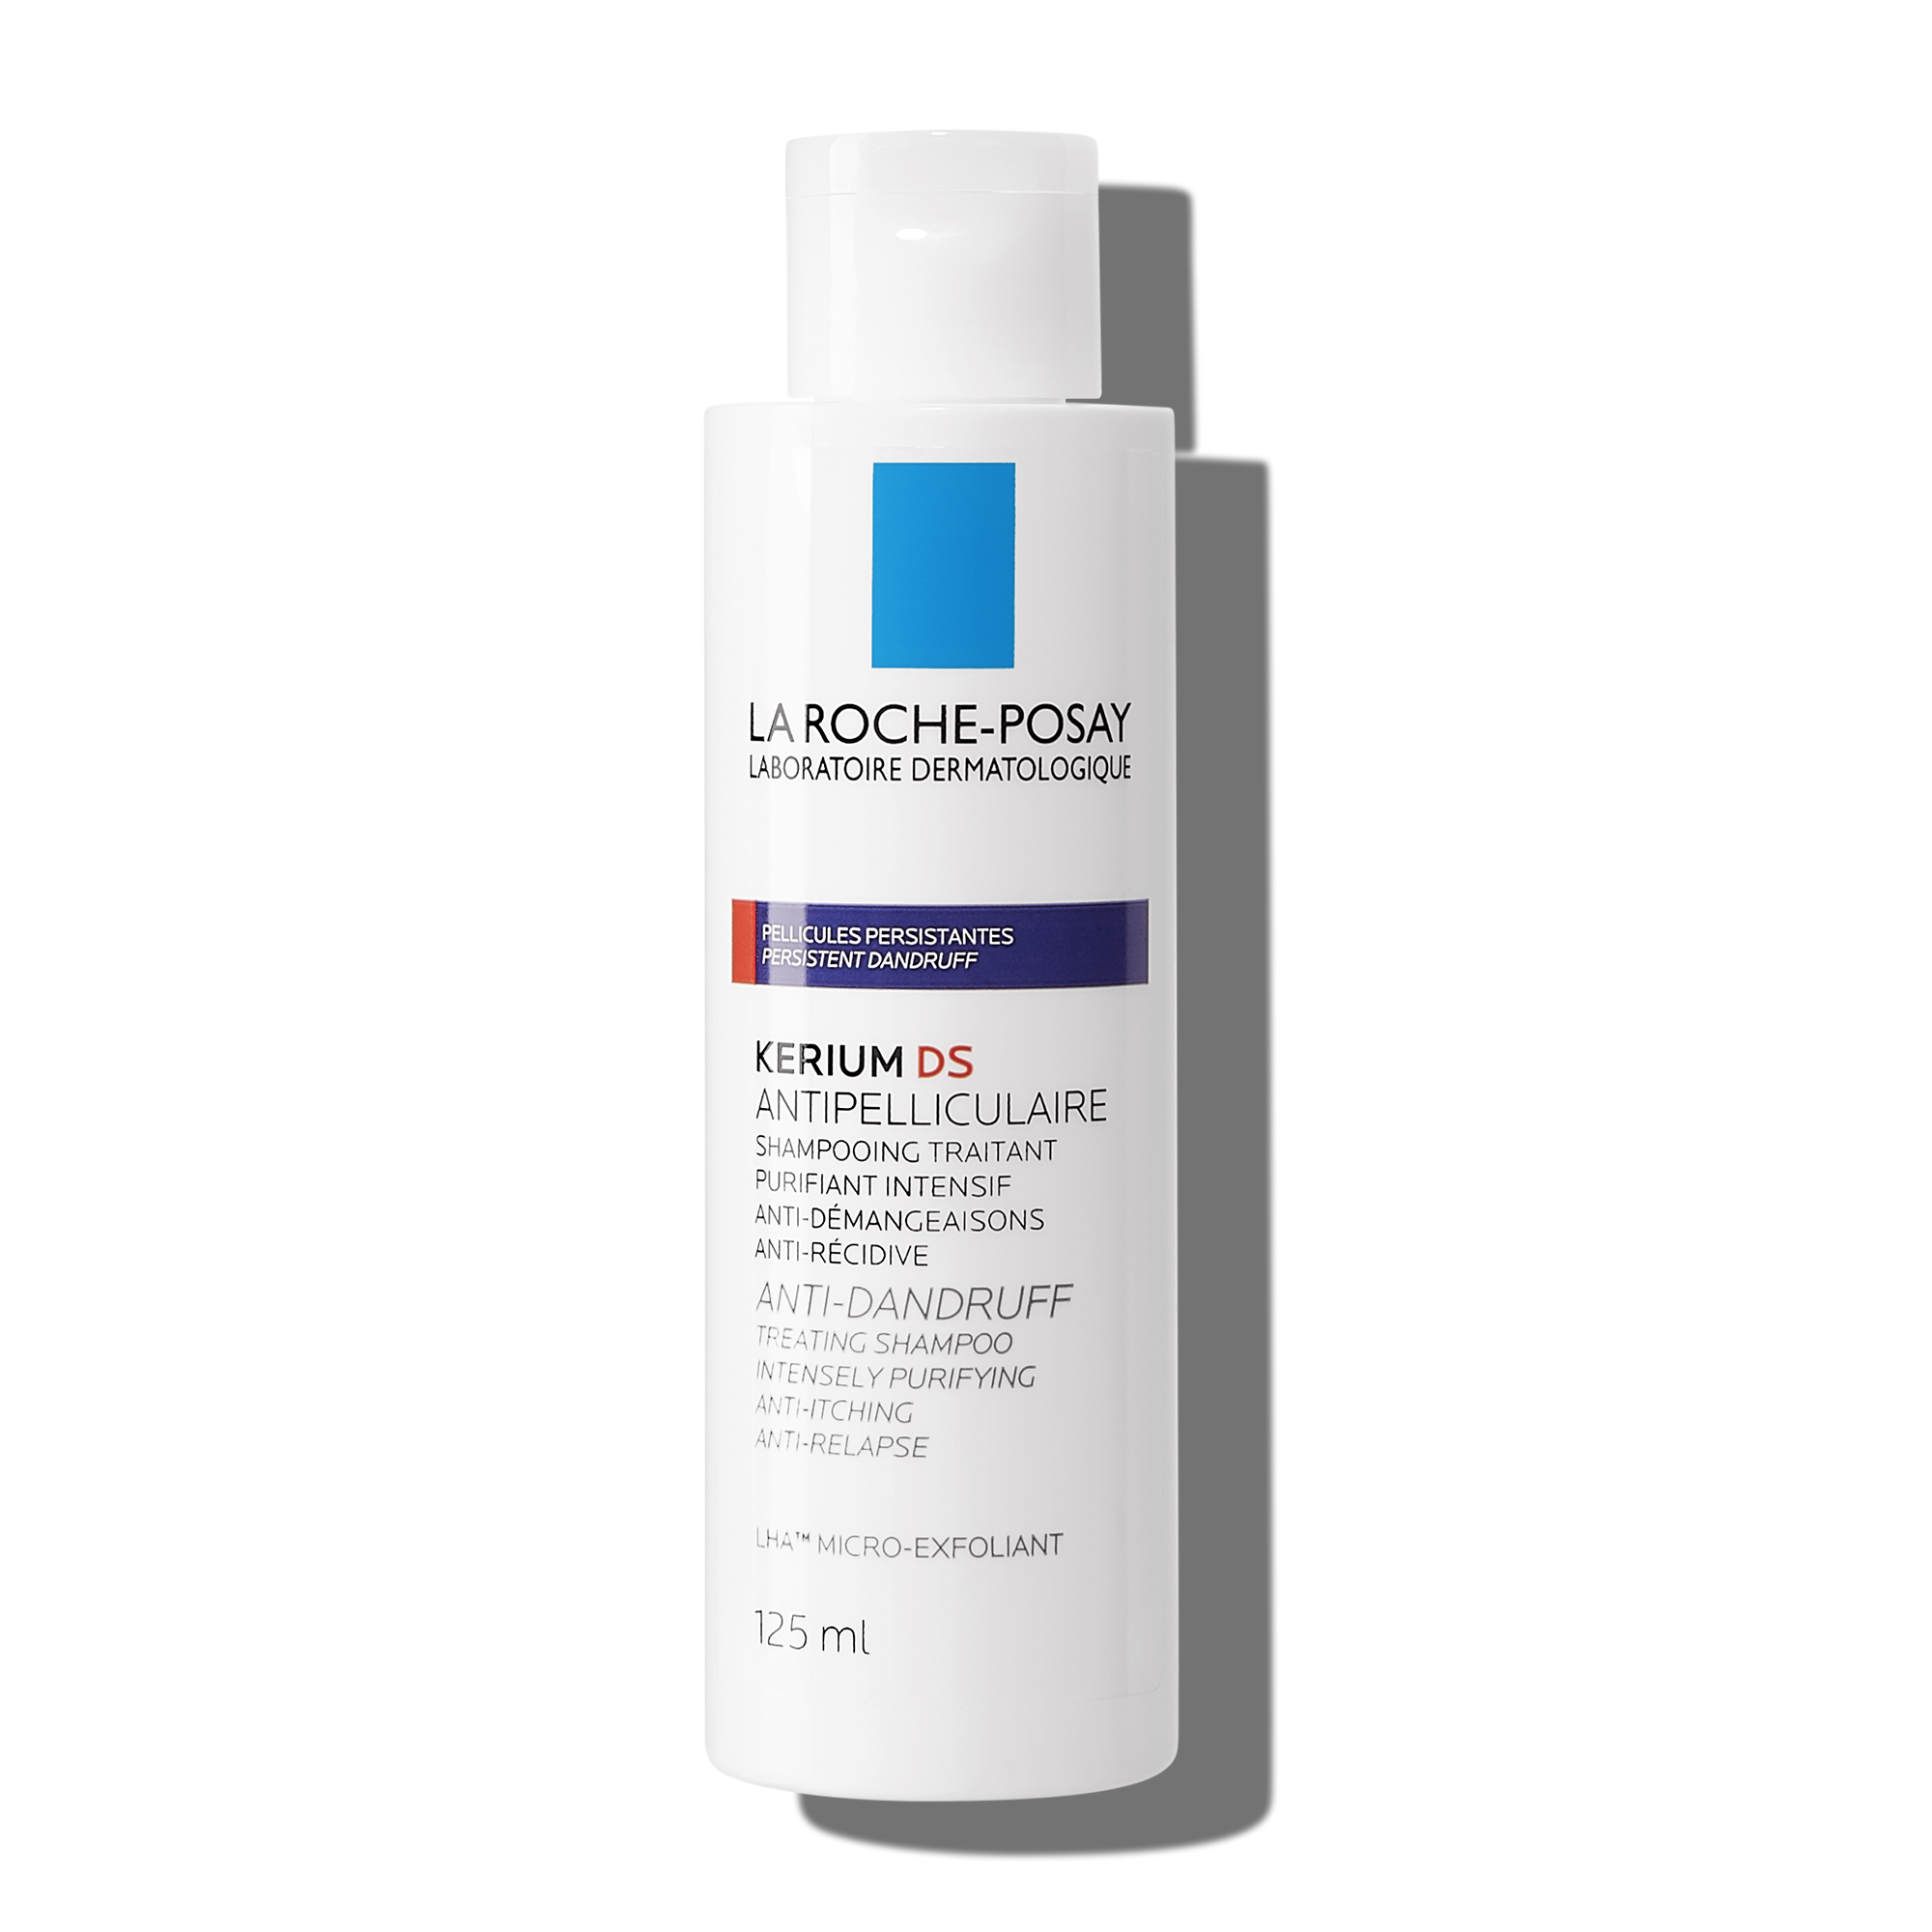 La Roche Posay La Roche-posay Kerium Ds Intensive Shampoo Antiforfora 125ml